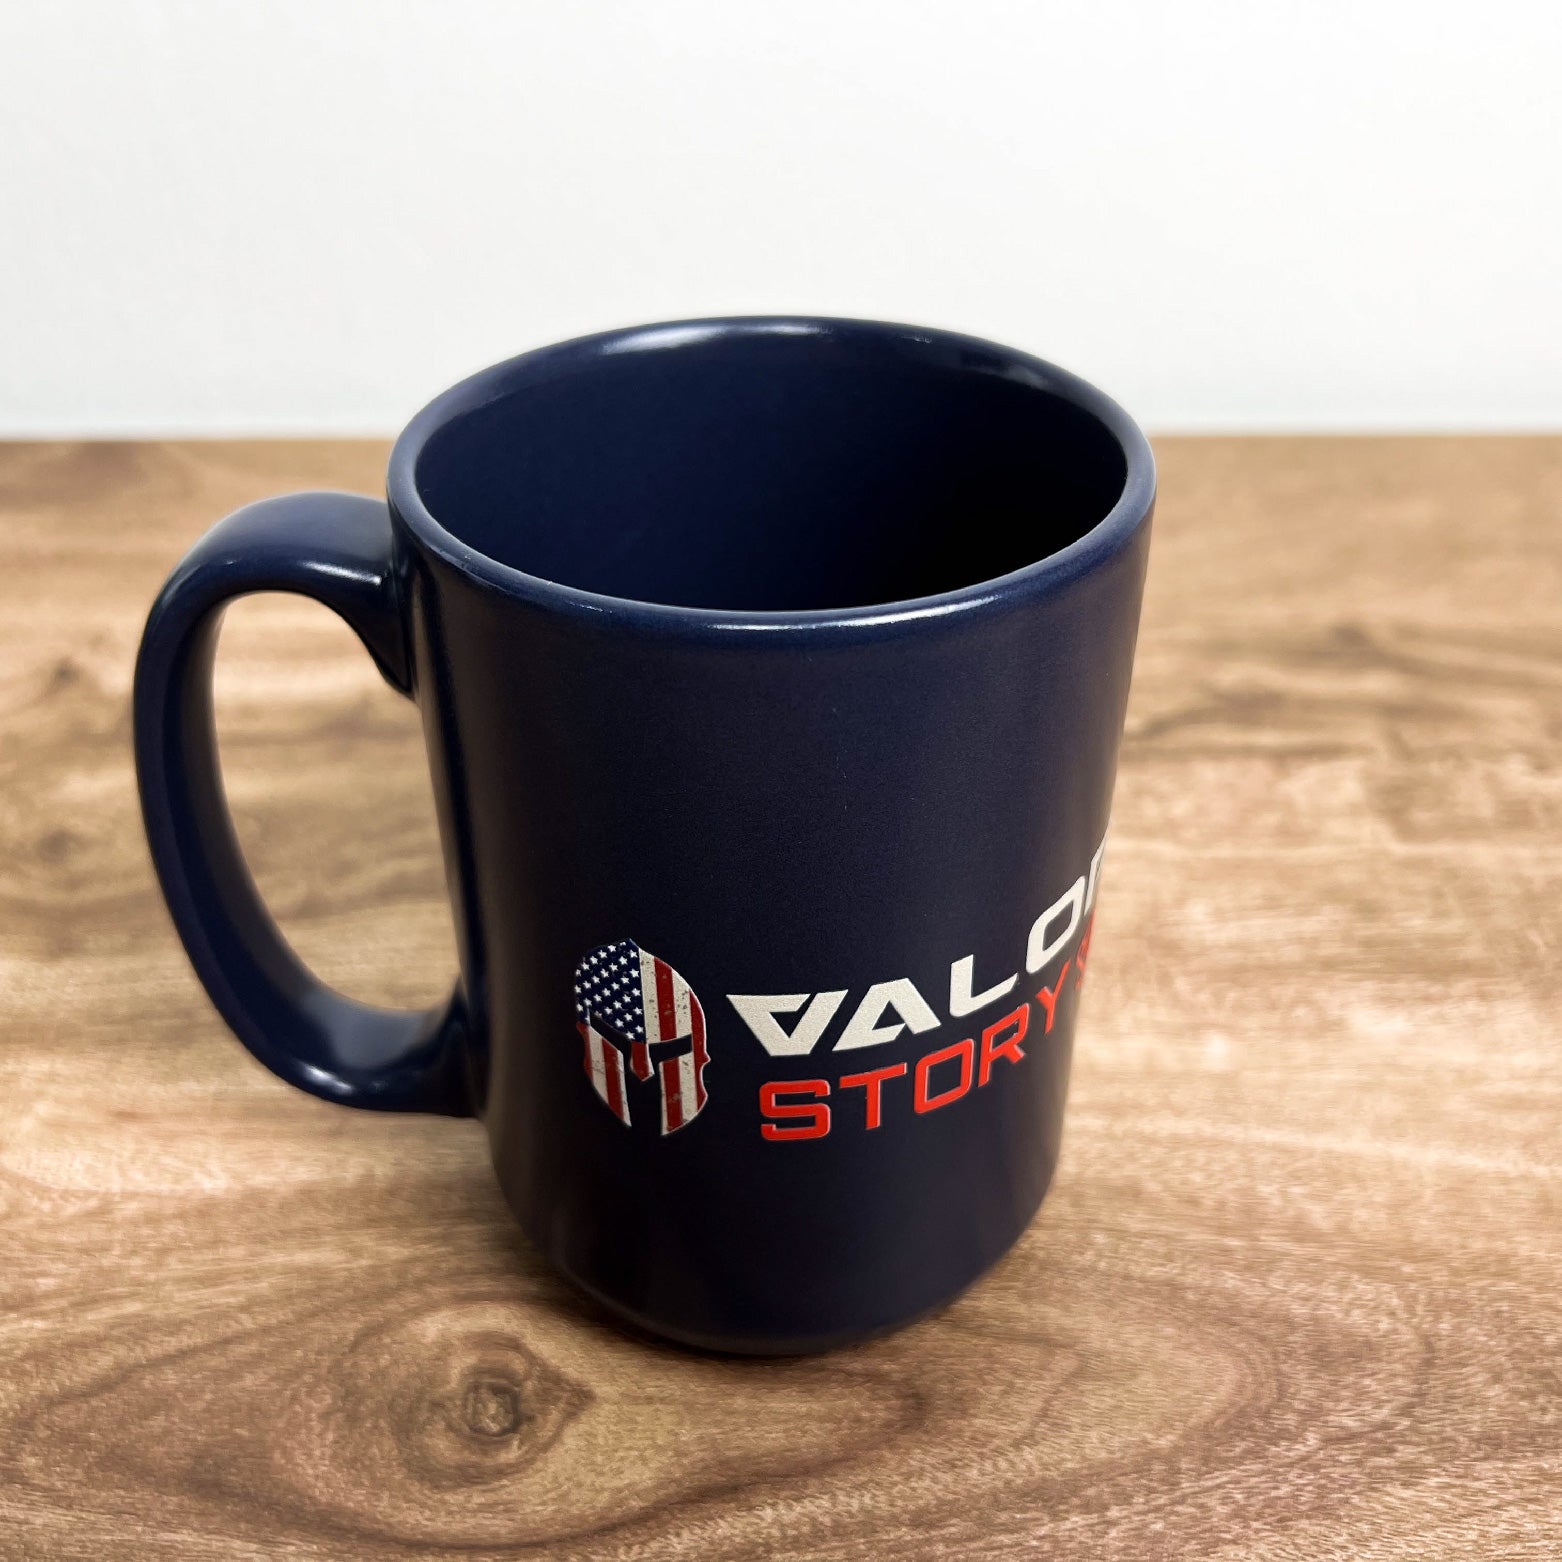 Valor PX Ceramic Mug แก้วกาแฟ - VALOR STORY [Navy]